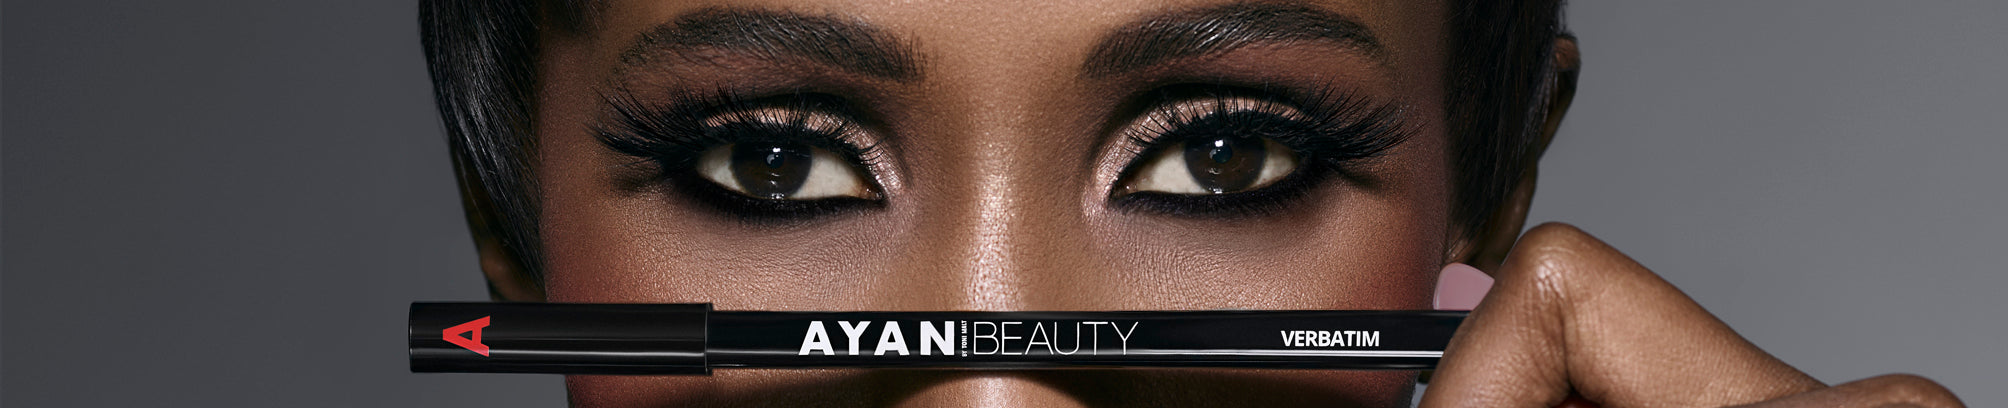 Ayan Beauty Chanel Ayan makeup luxurious palette superior black gel eye pencil premium faux mink eyelashes diamond highlighter eyeshadow